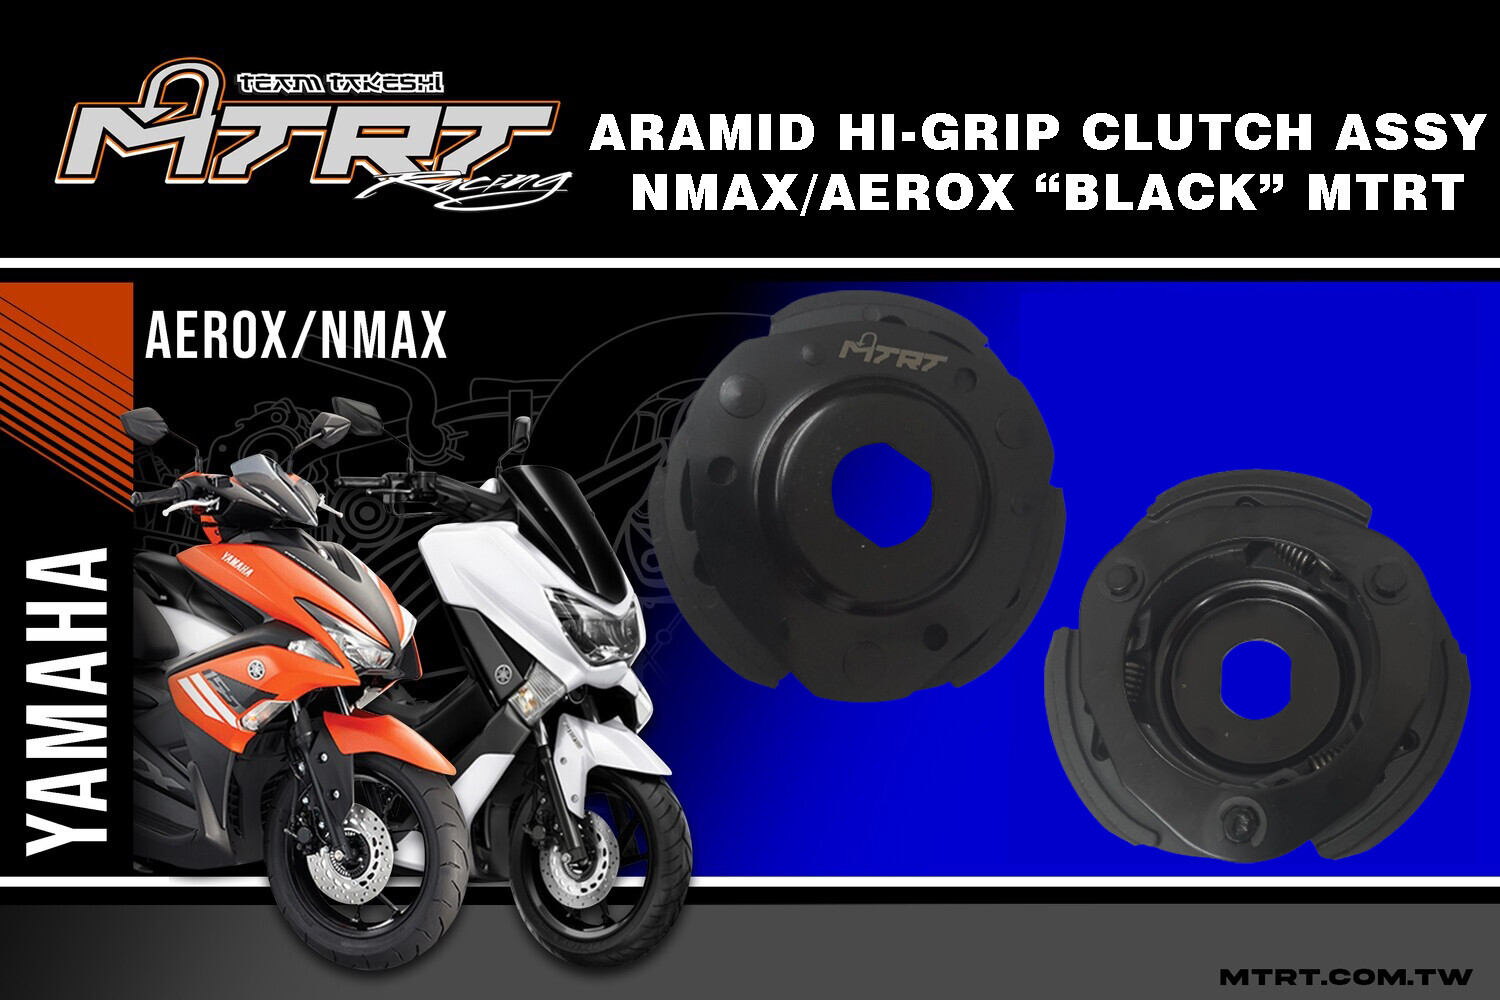 ARAMID HI-GRIP CLUTCH ASSY NMAX/AEROX "BLACK" MTRT